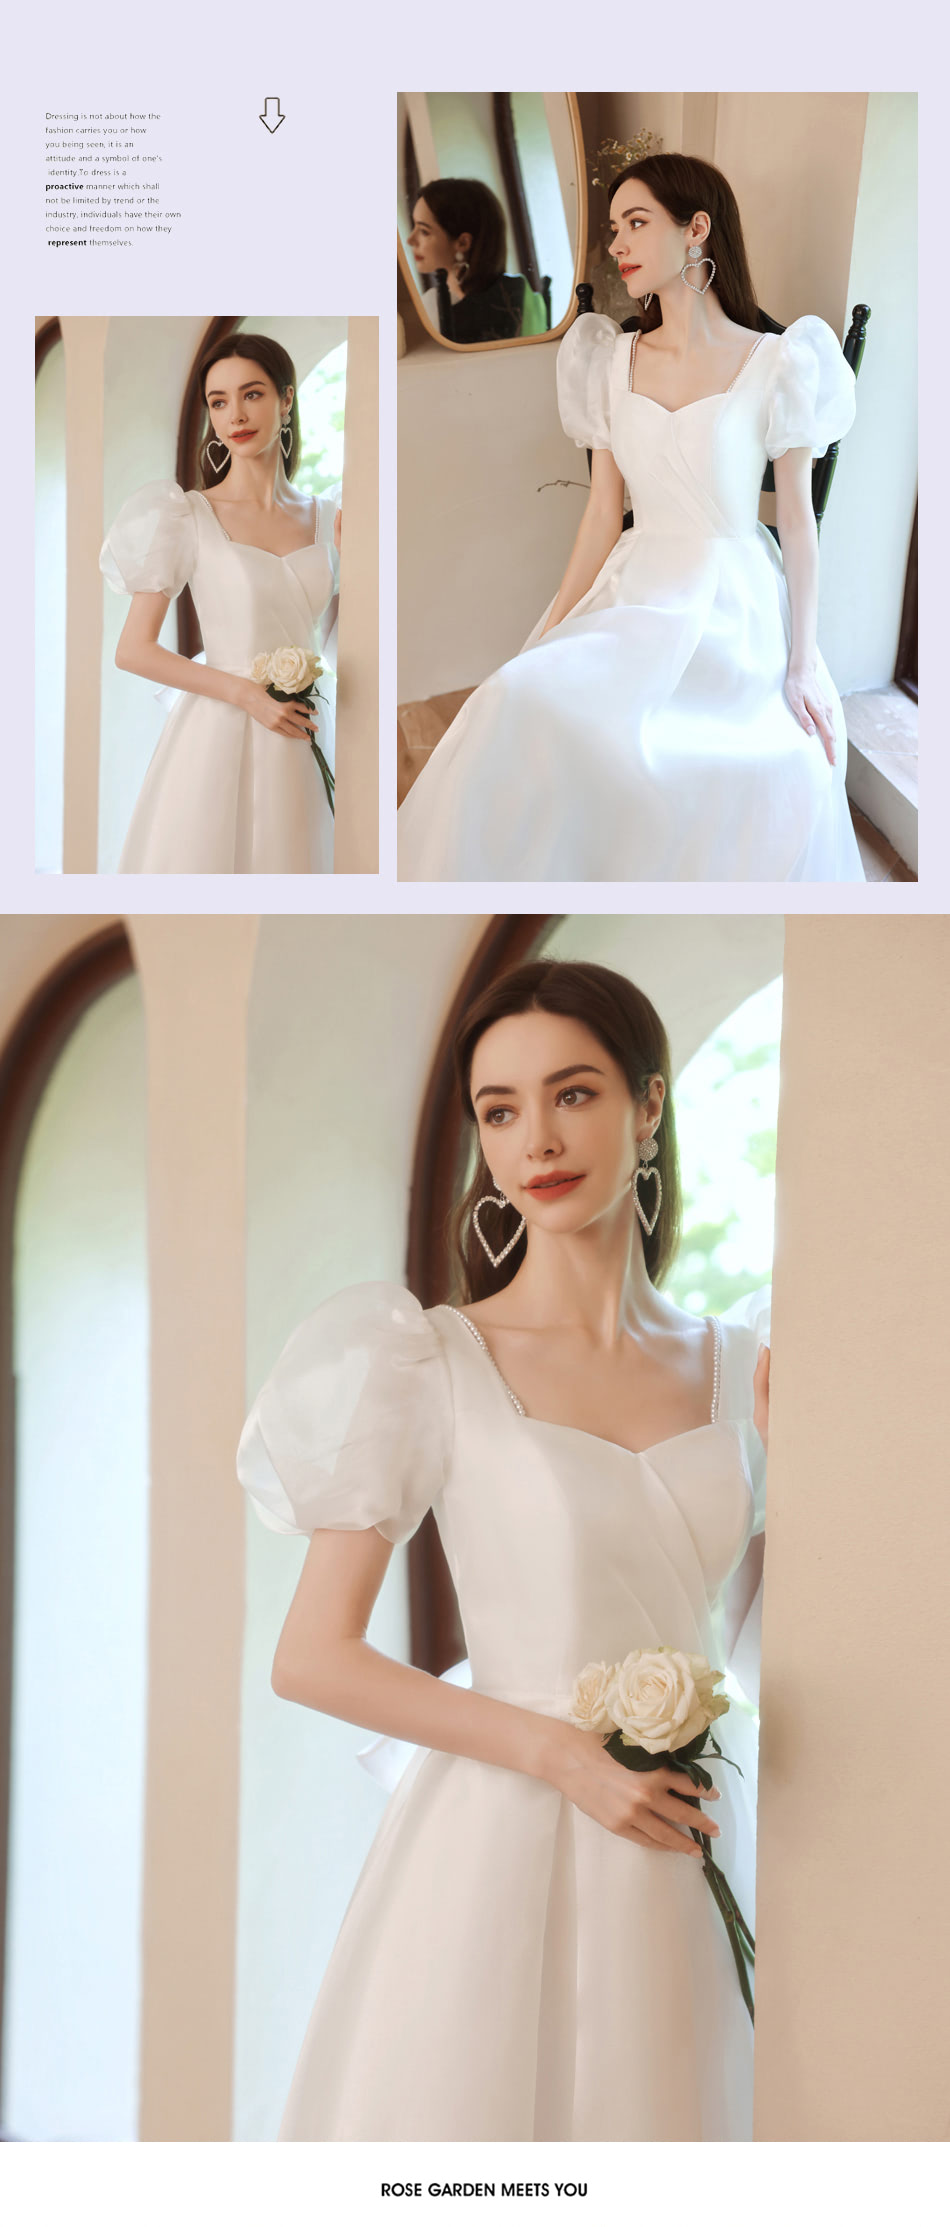 White-Short-Puff-Sleeve-Prom-Formal-Ball-Gown-Evening-Dress12.jpg